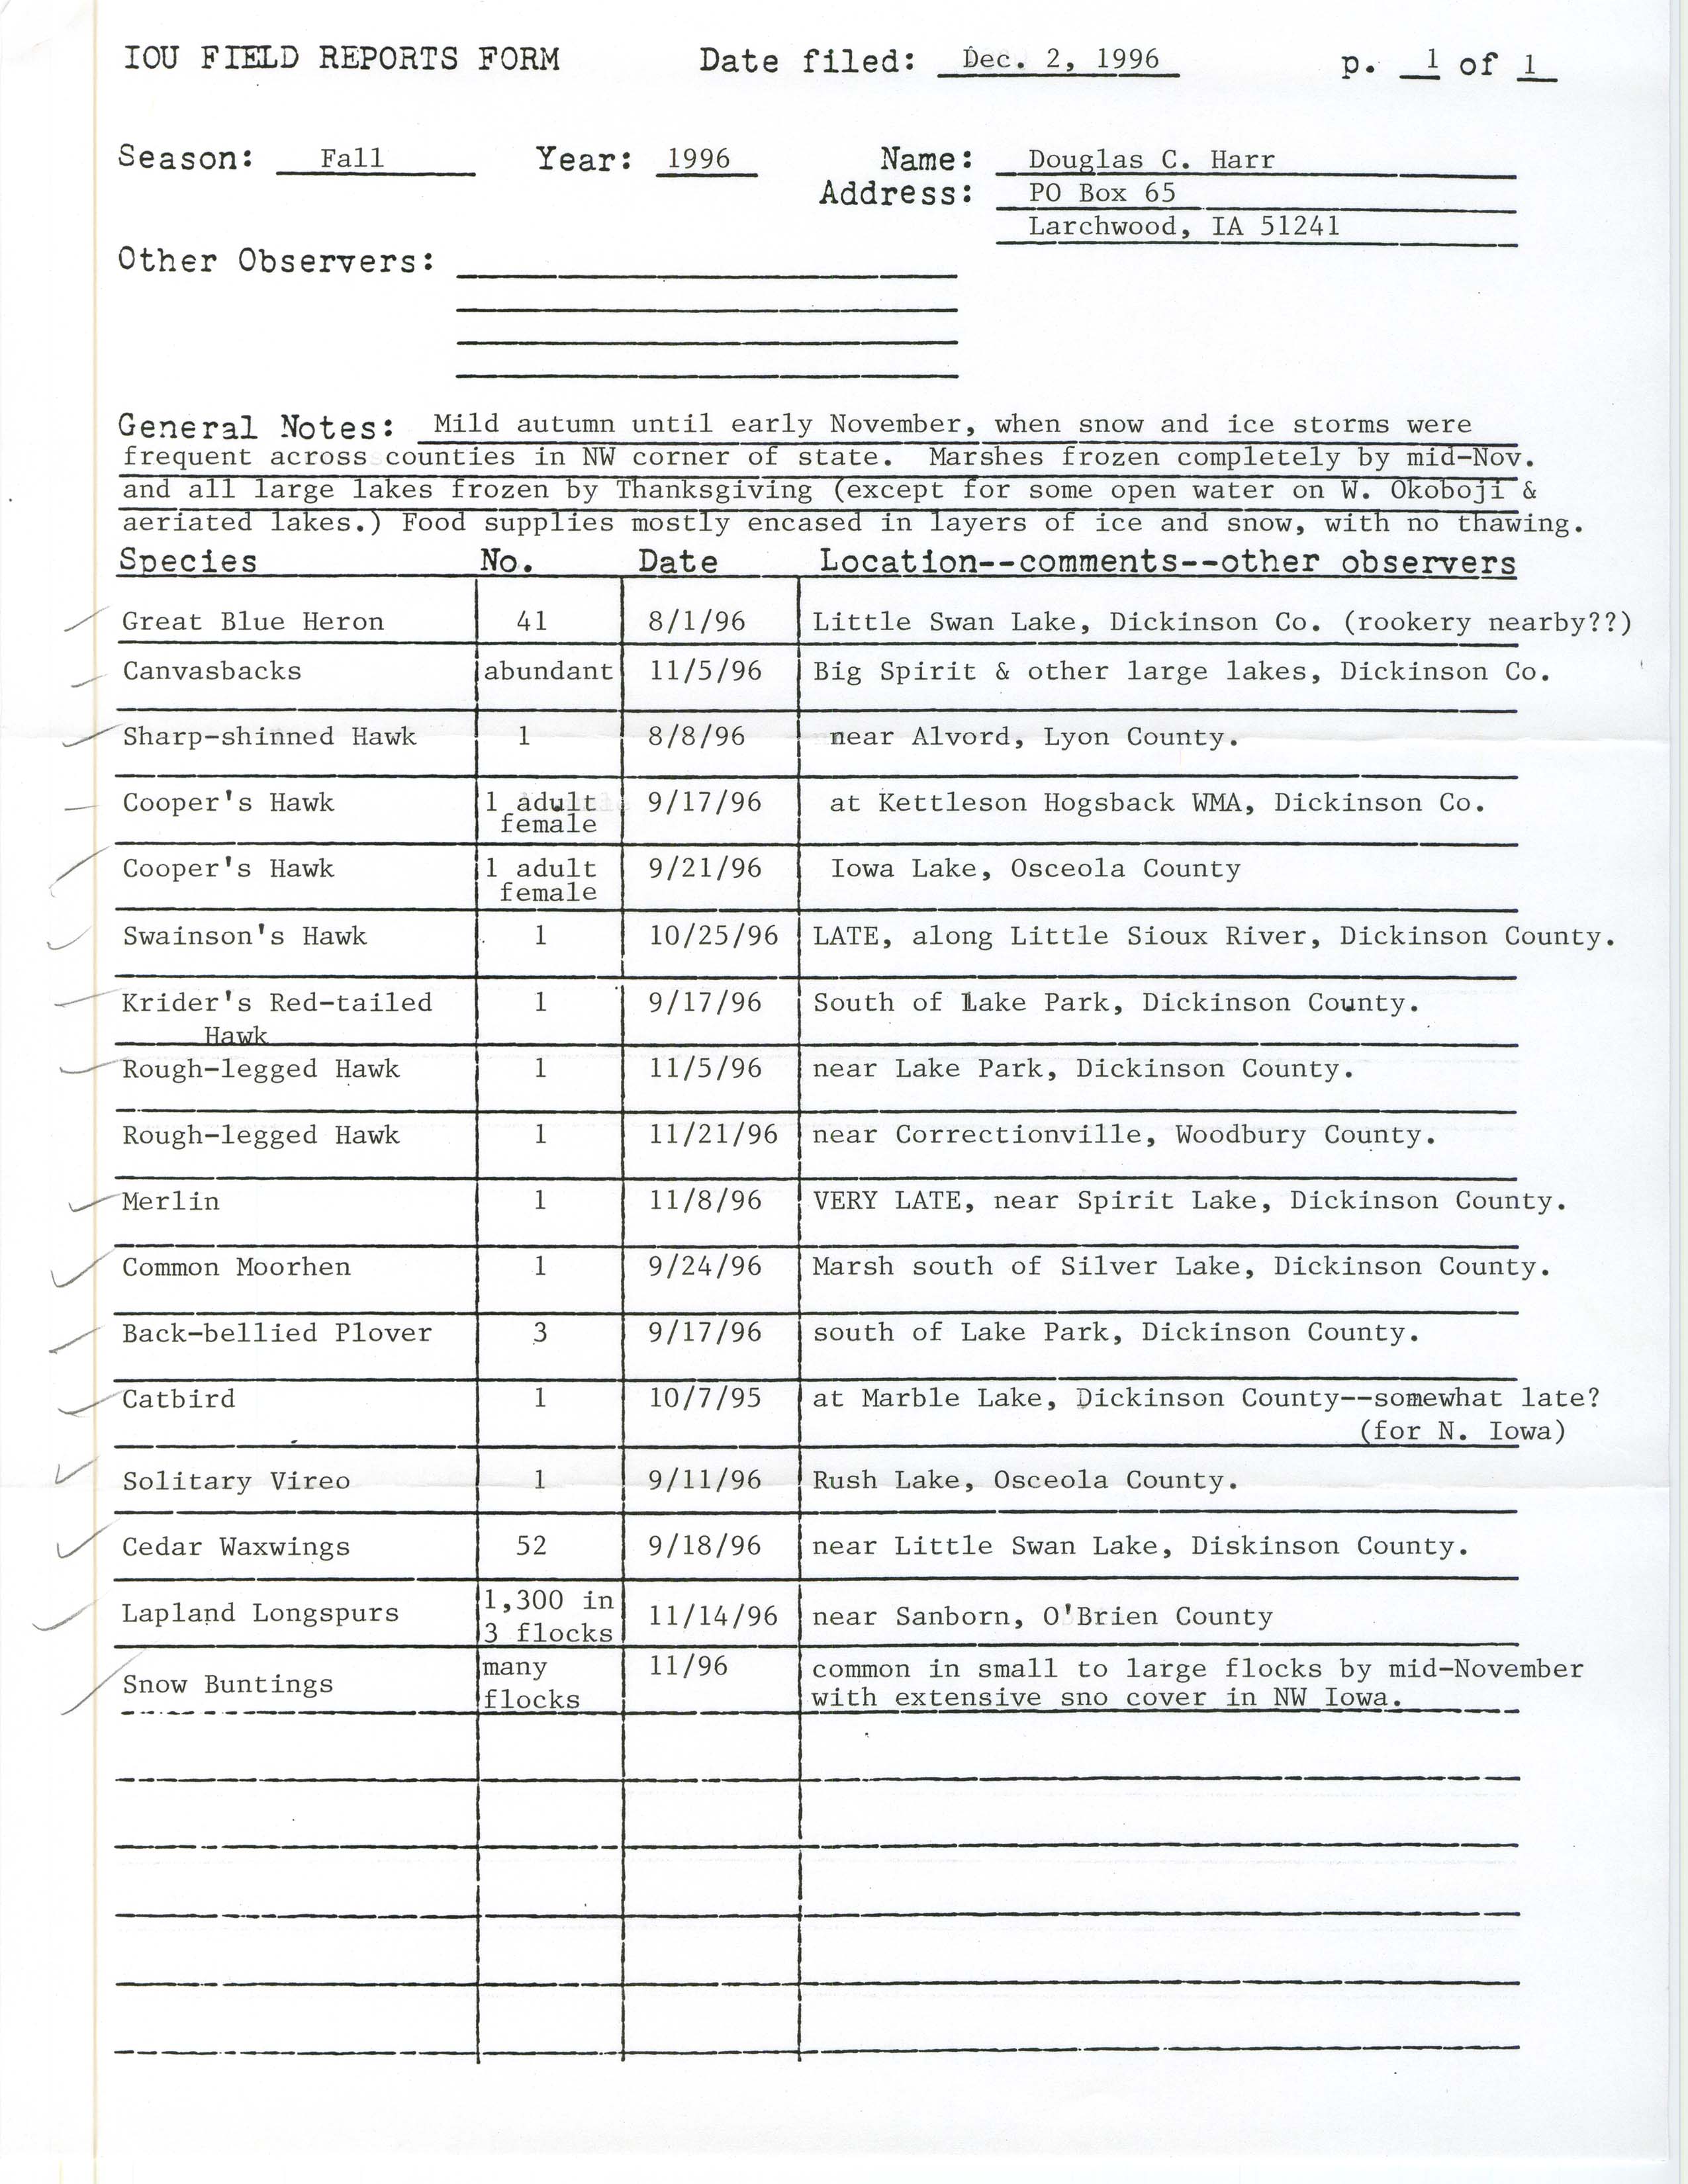 IOU field reports form, Douglas C. Harr, December 2, 1996